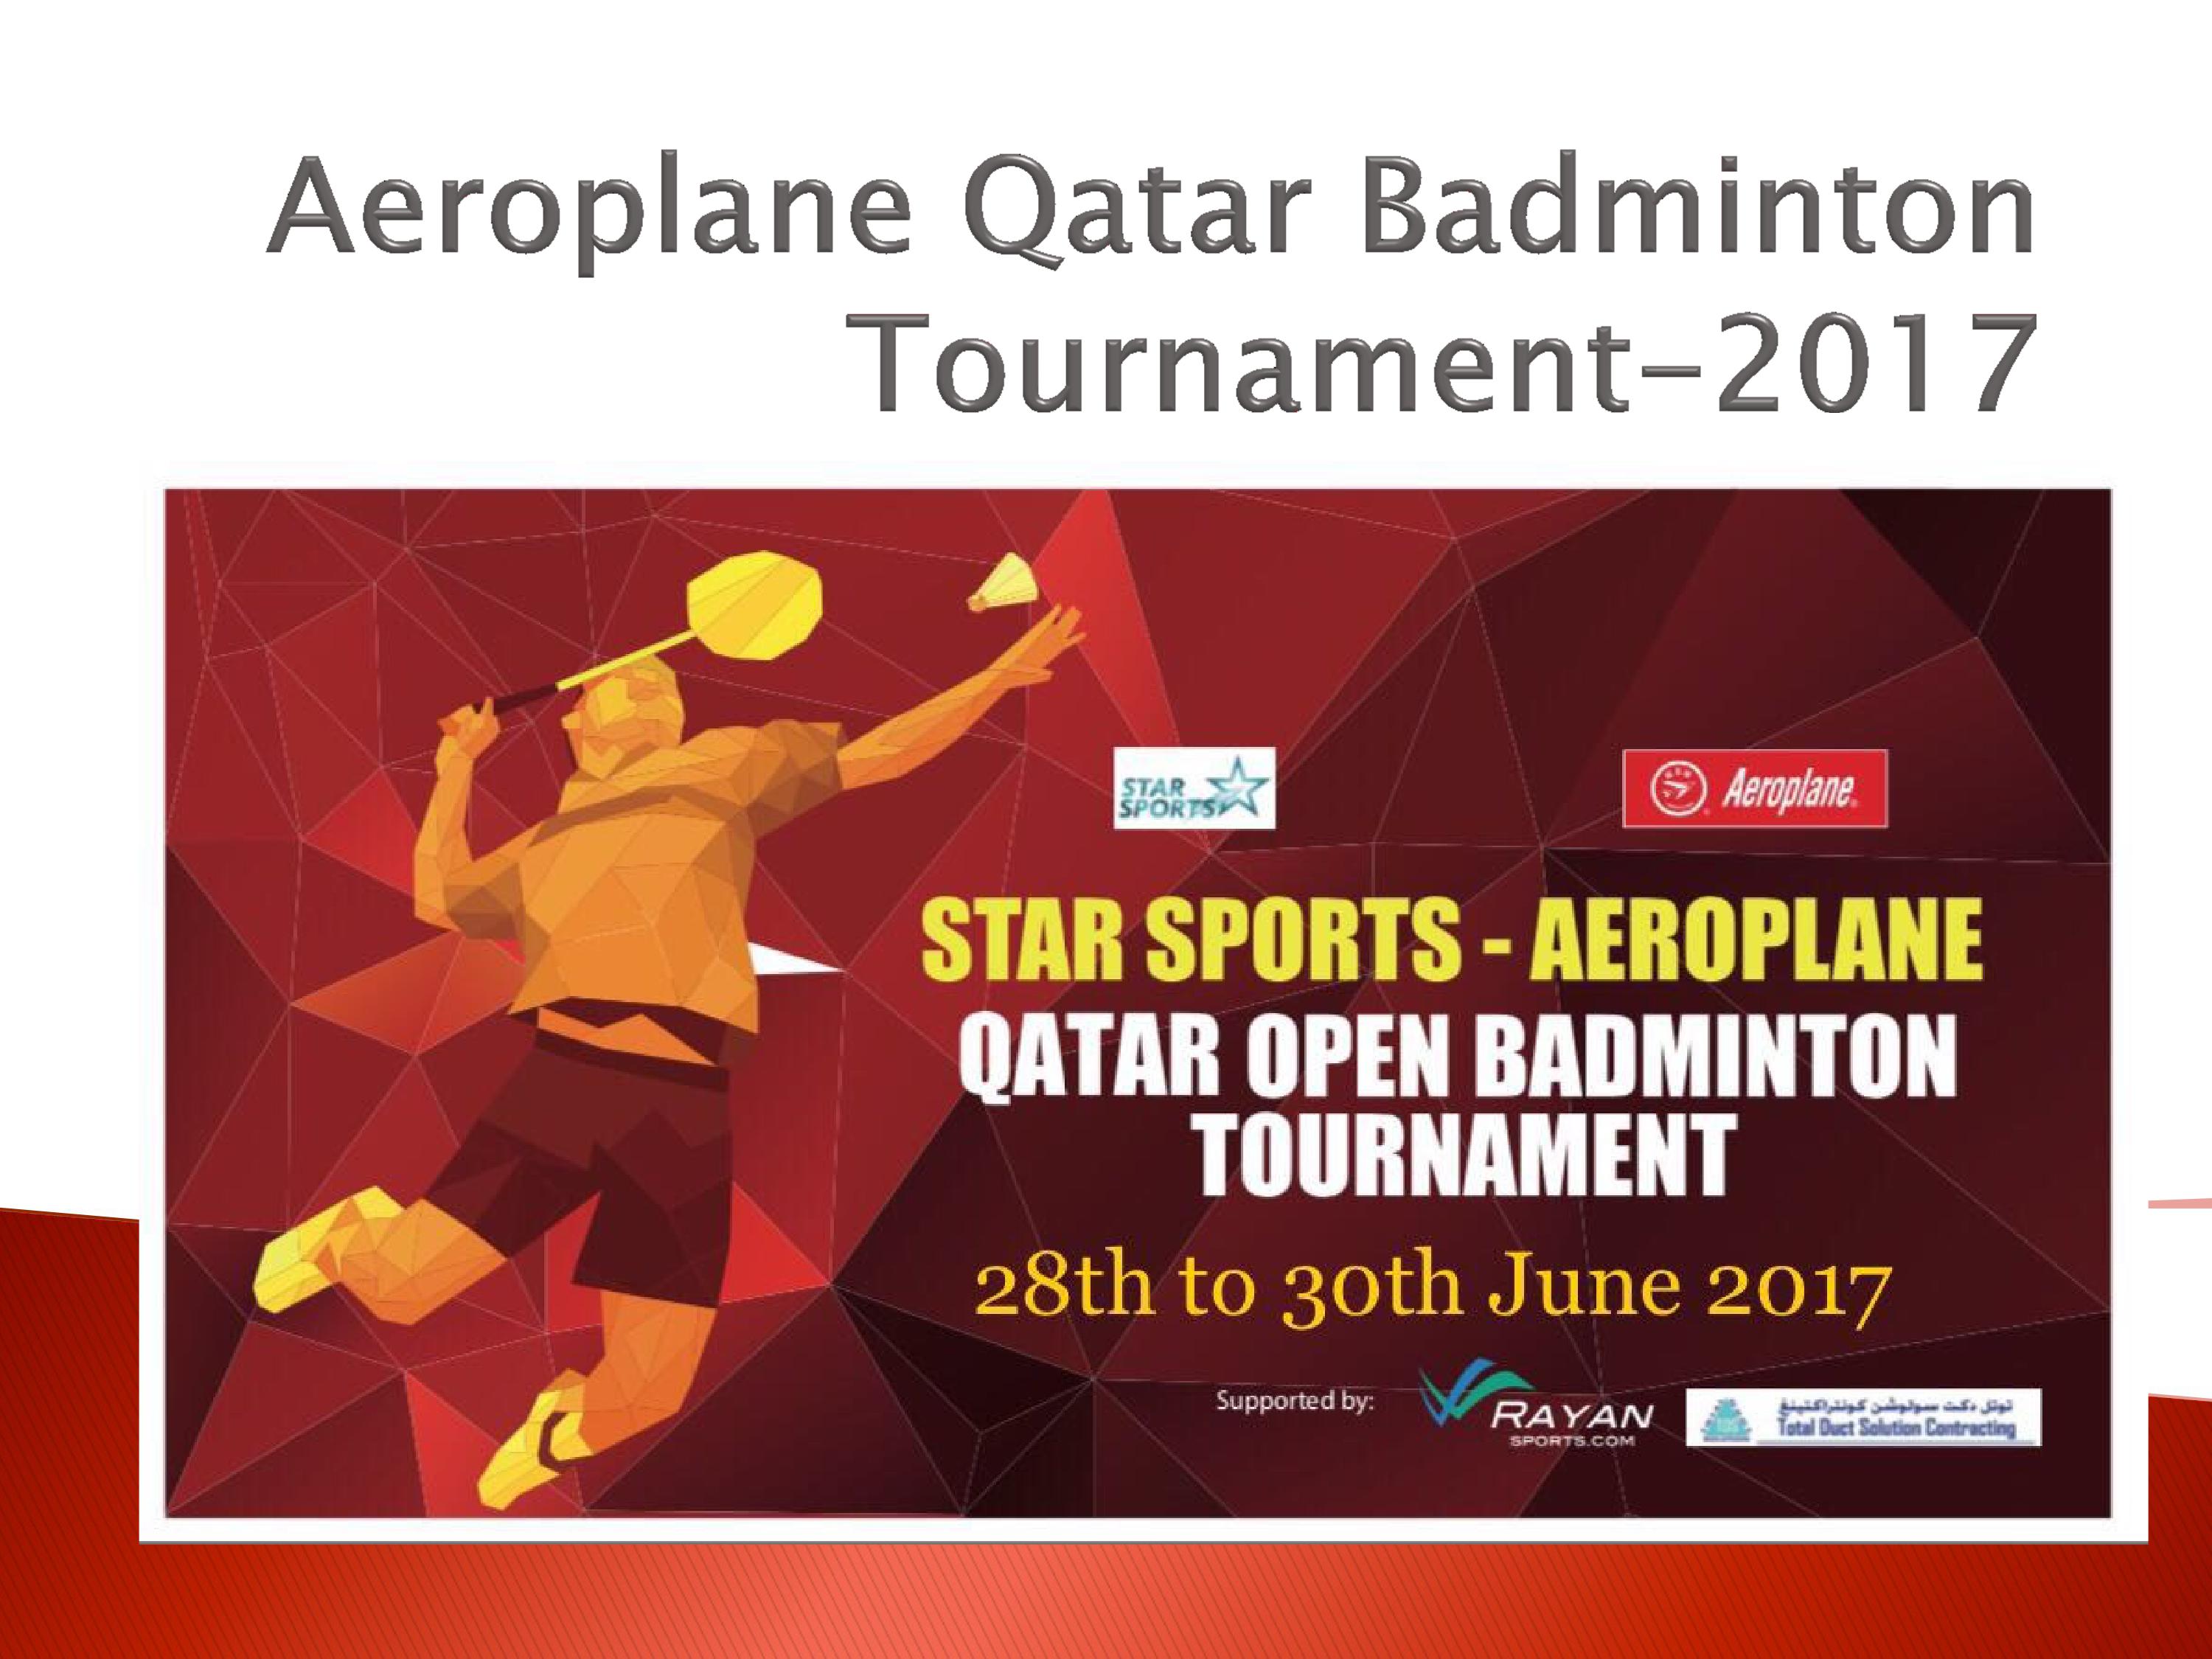 AEROPLANE Qatar open